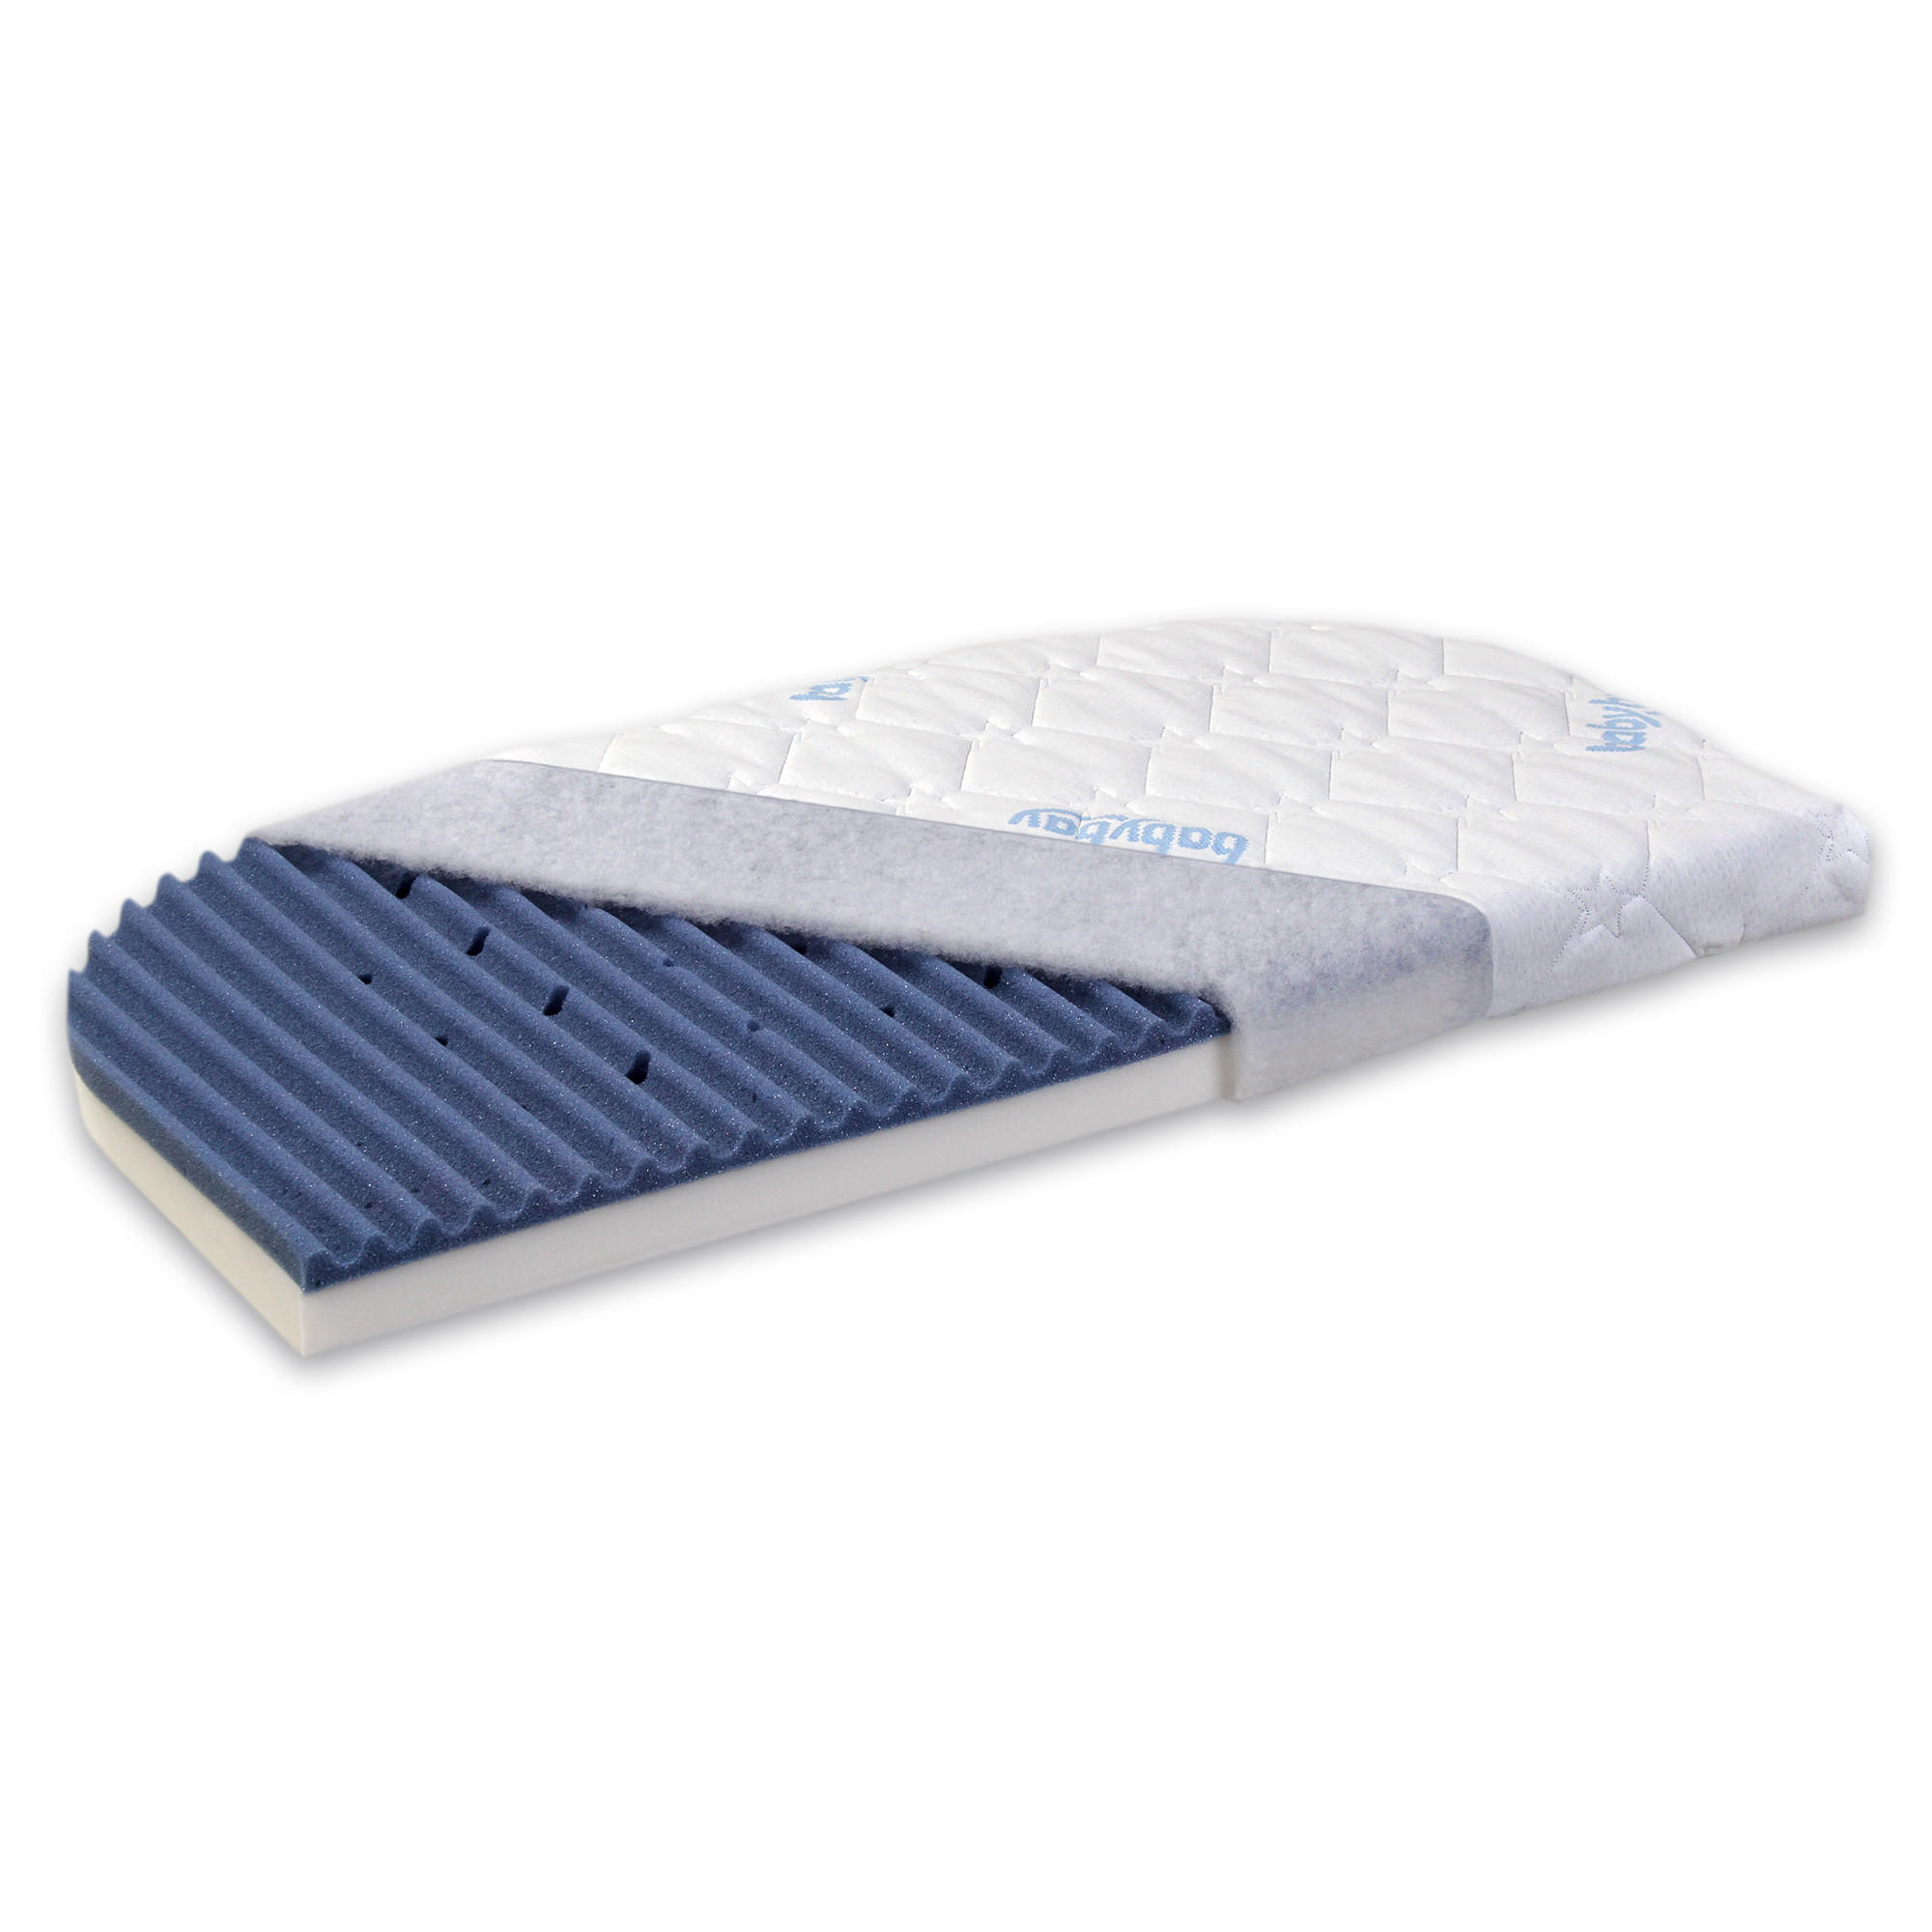 BEISTELLBETTMATRATZE Babybay Comfort  - Blau/Weiß, Basics, Textil (89/45cm) - Babybay